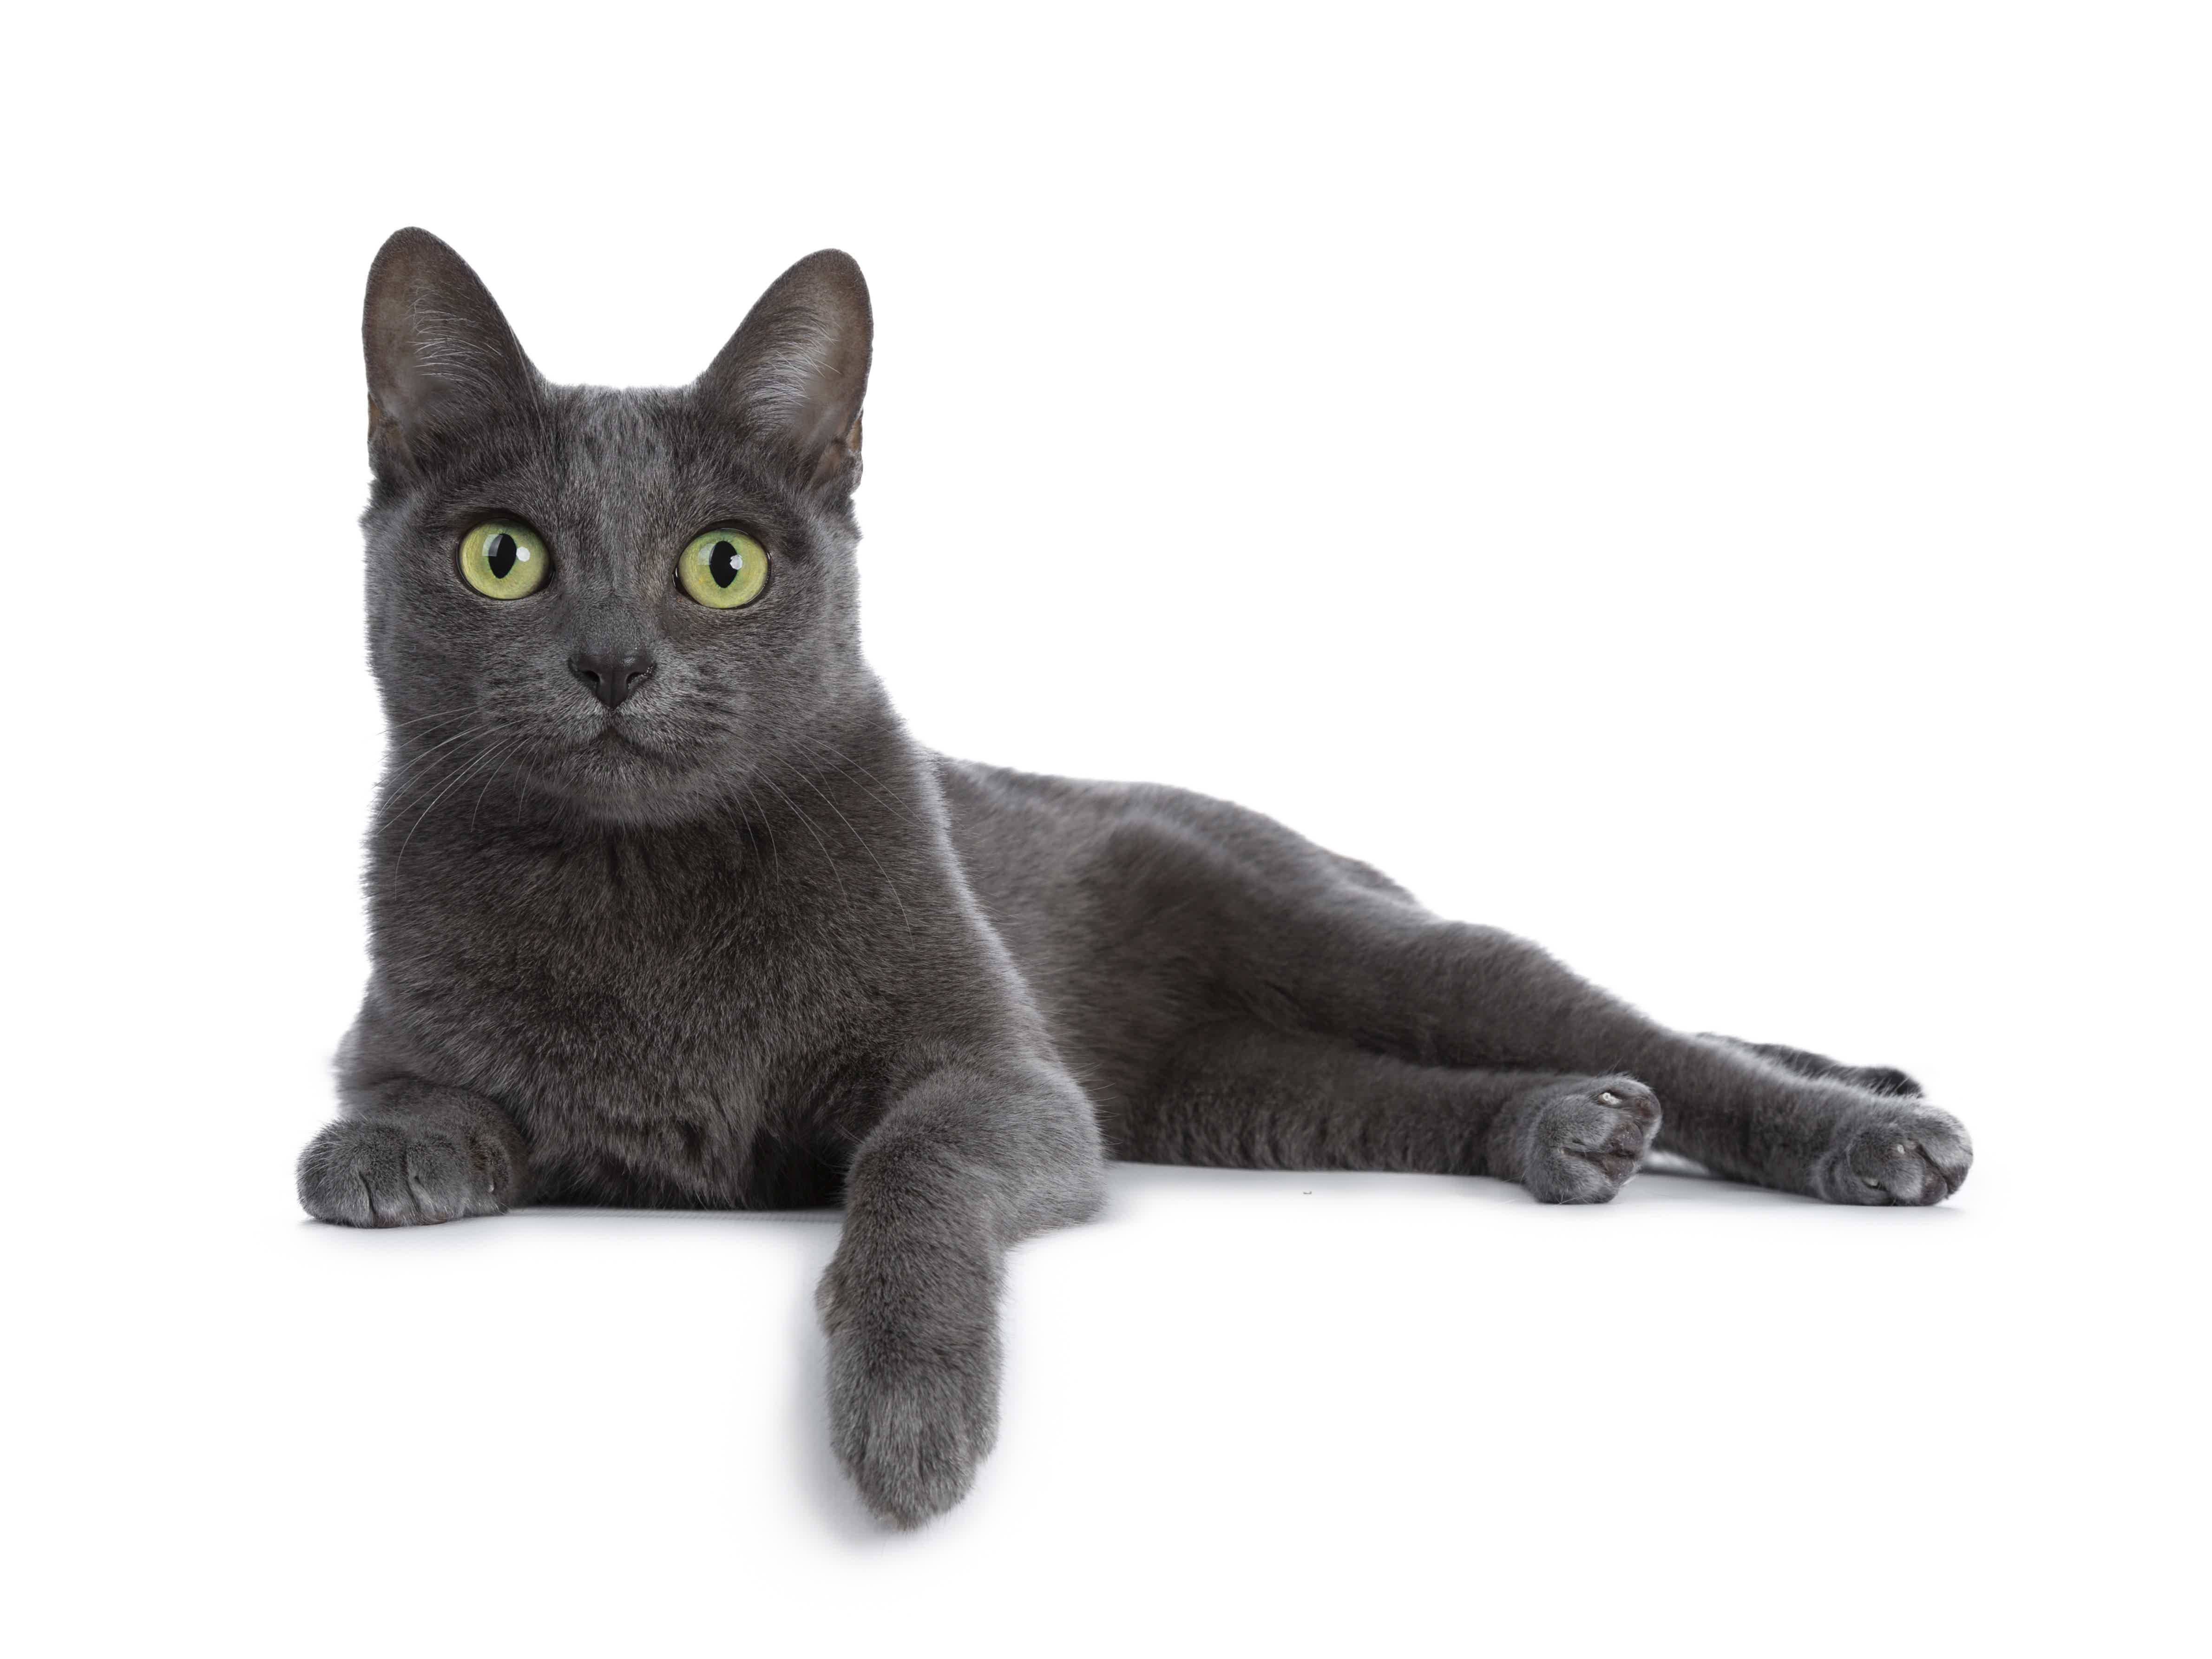 Conheça o gato Korat. Fonte: Adobe Stock.